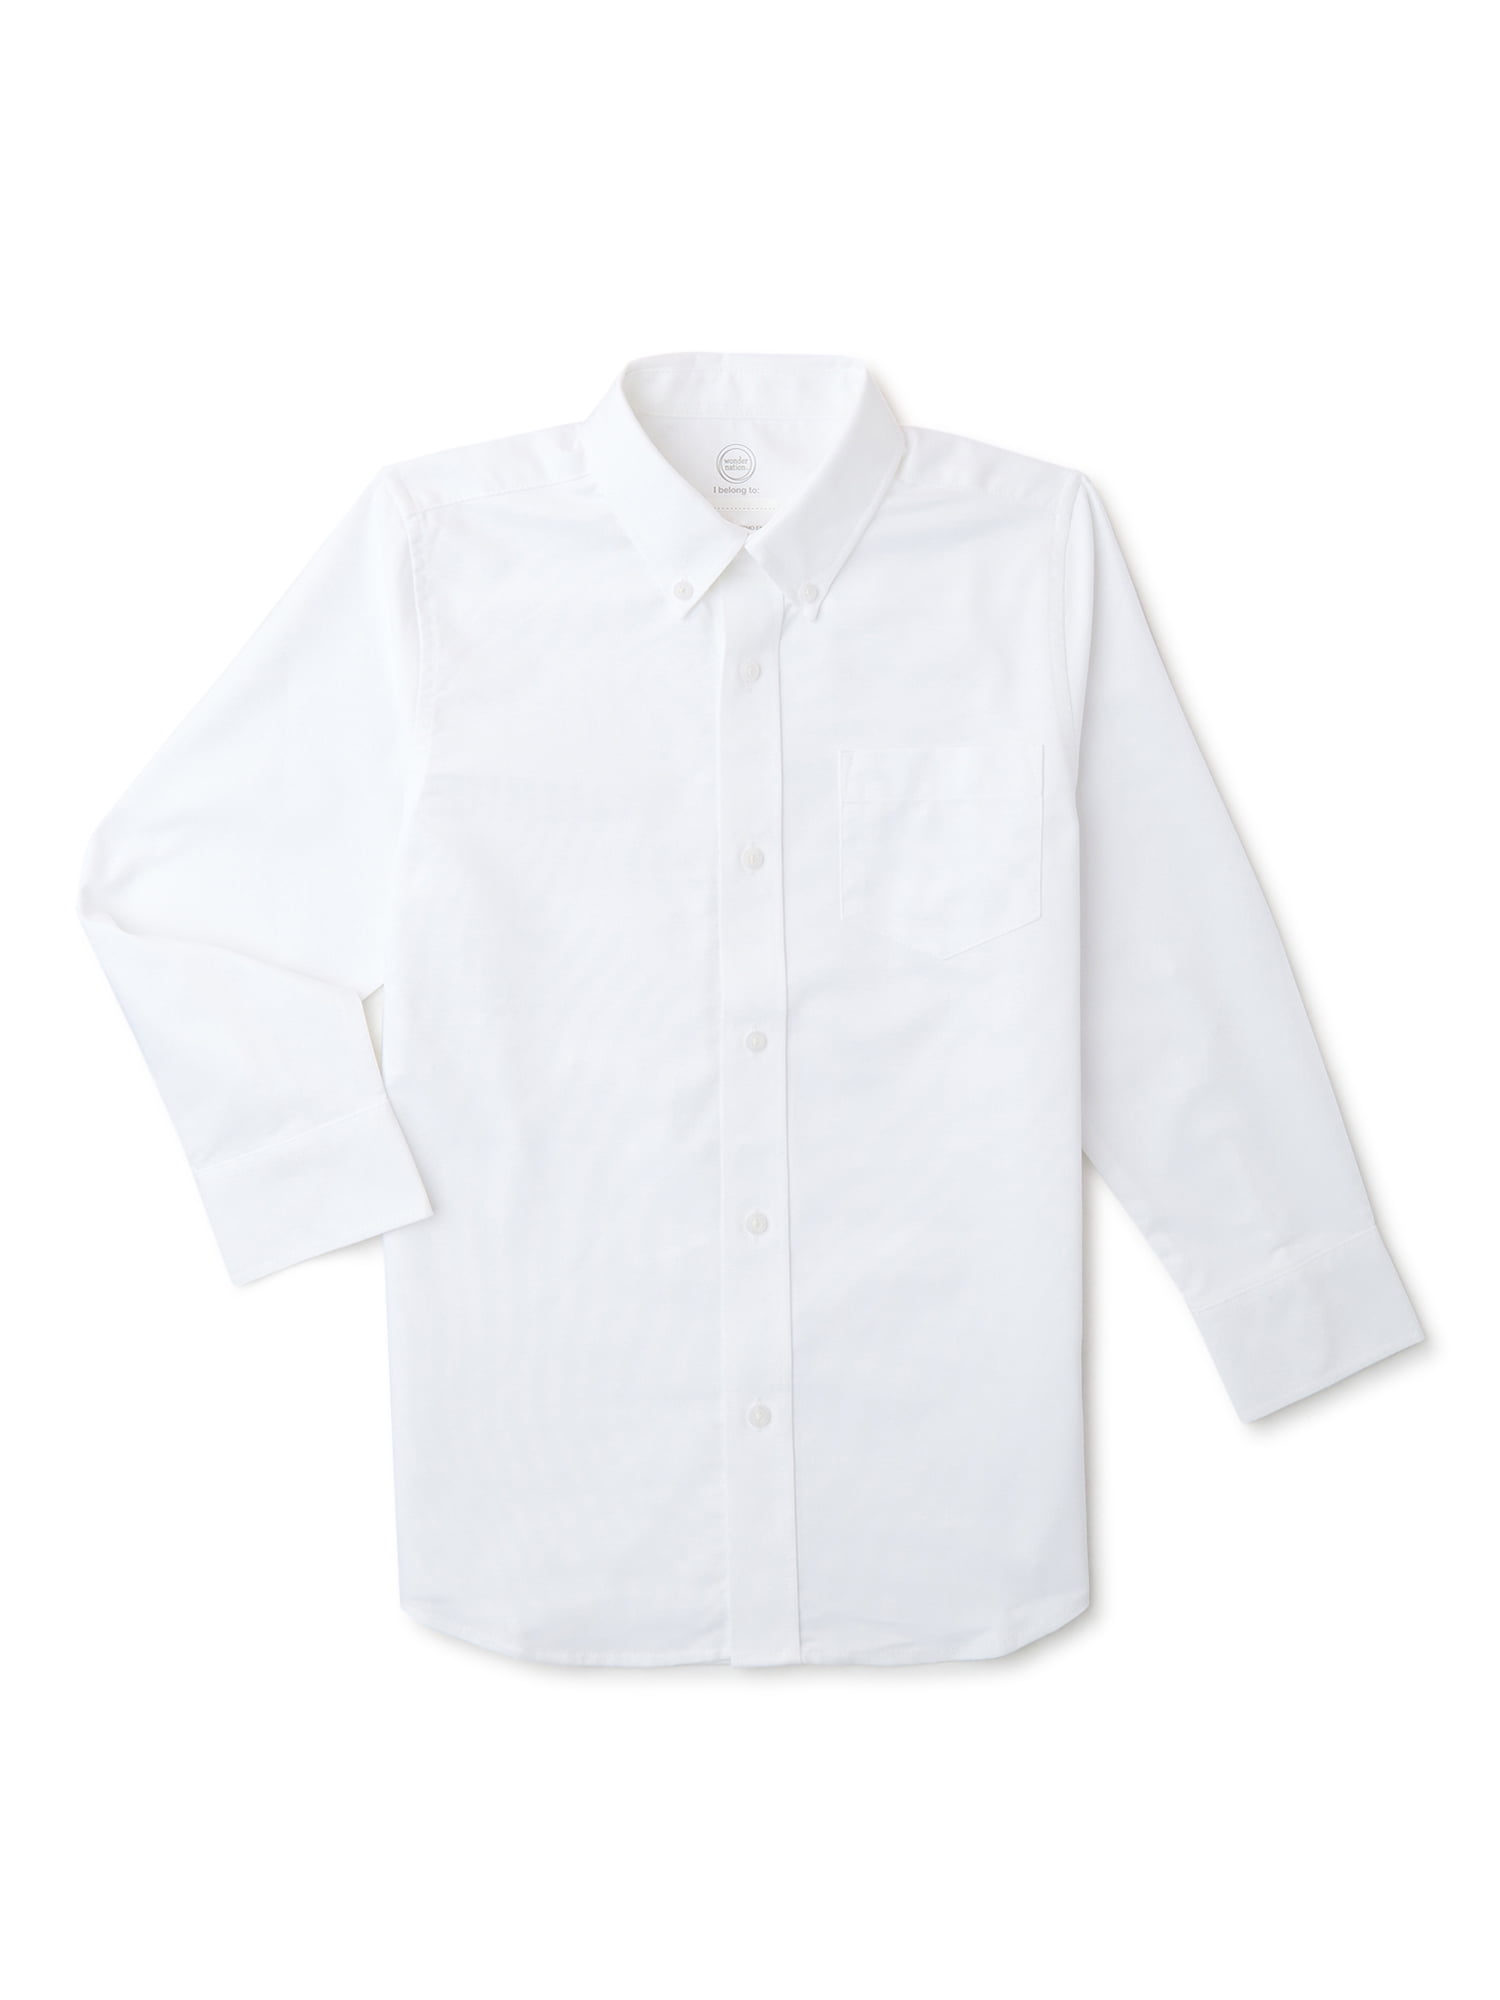 2 Pack Girls Shirt Blouse Top White School Uniform Short Sleeve 